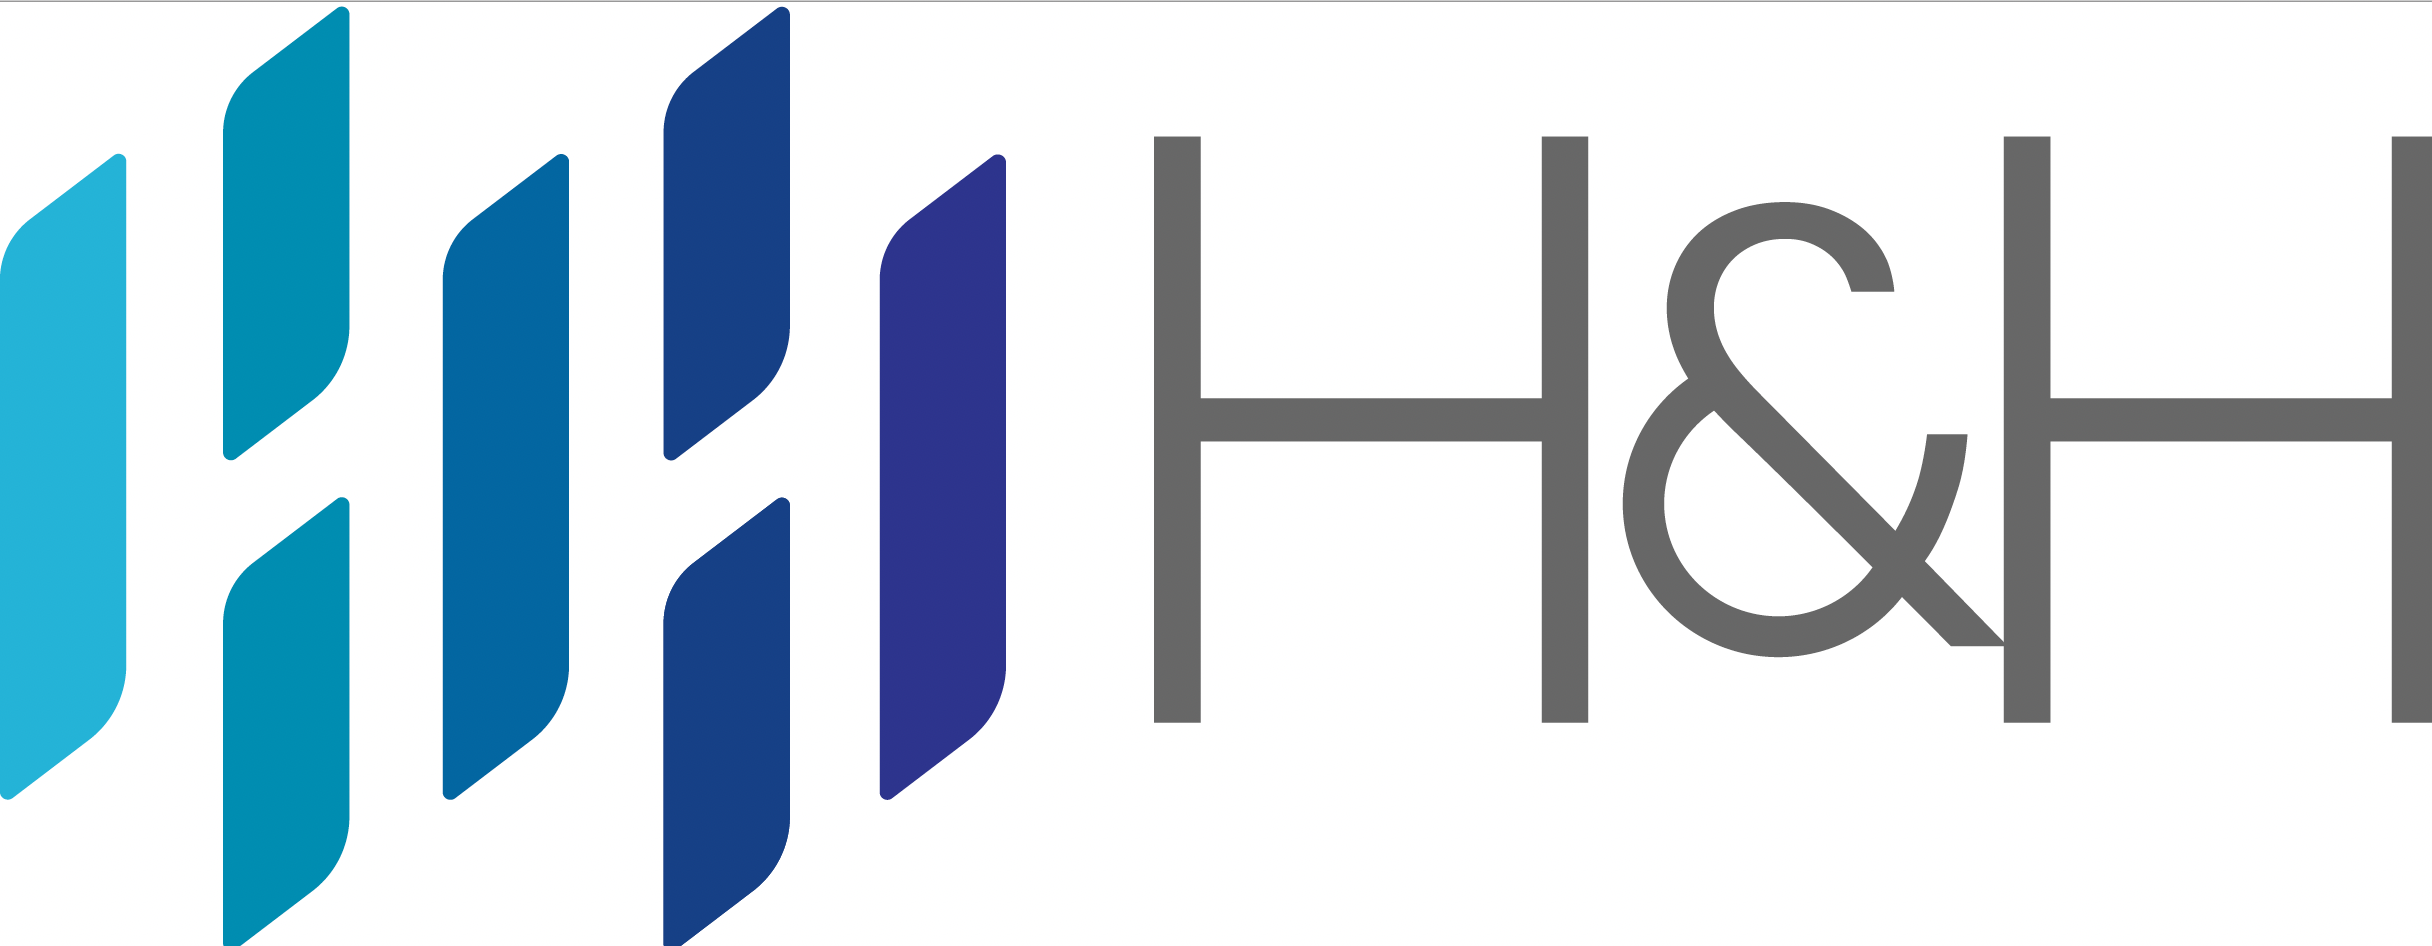 hardesty and hanover llc logo